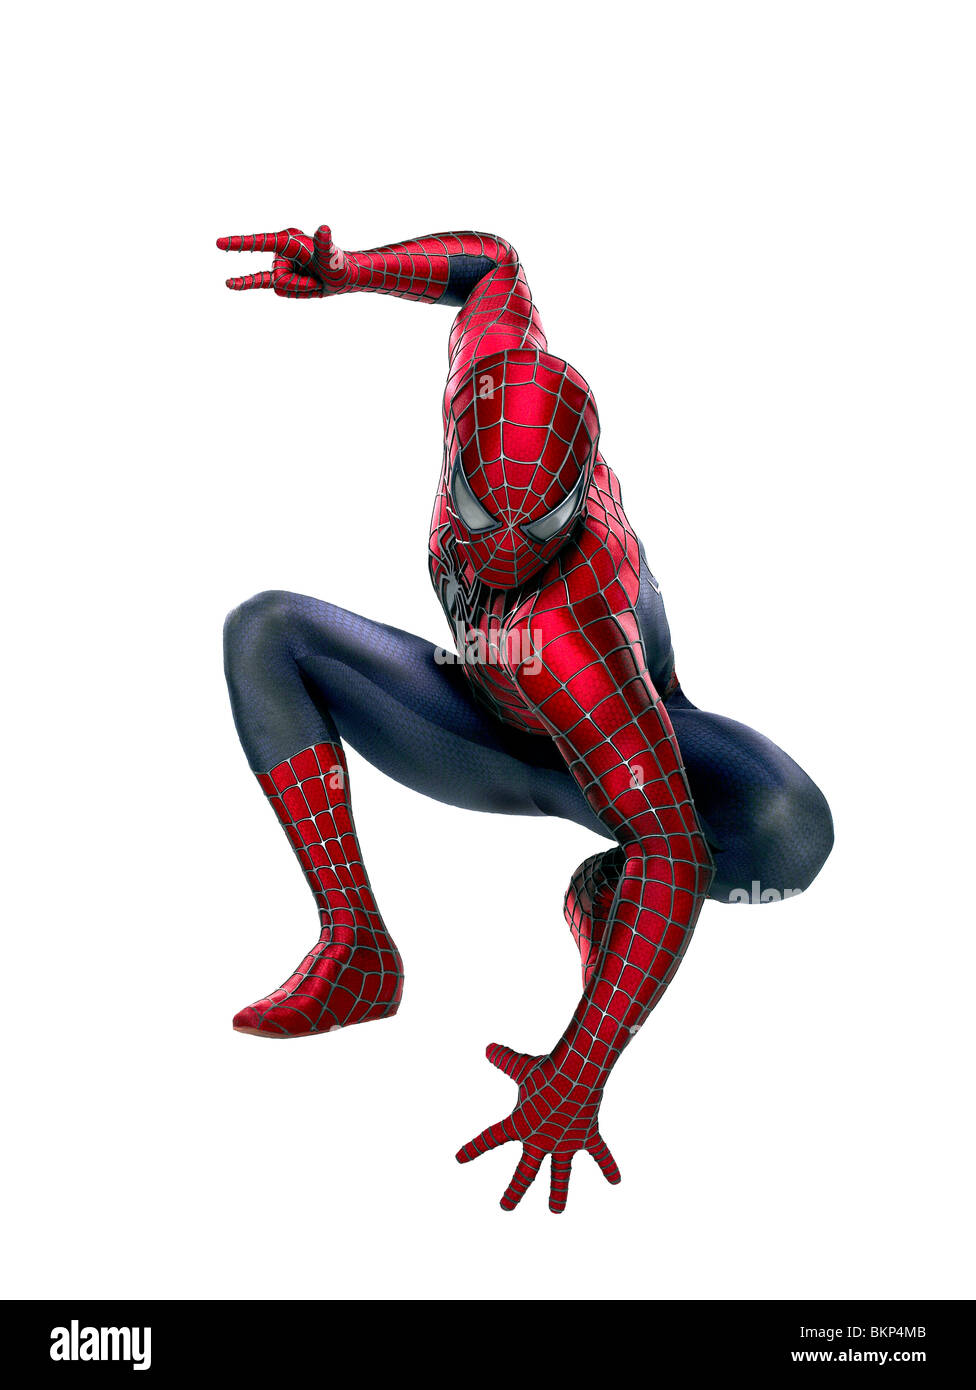 Marvel Studios Spider-Man 3 Walkie Talkie Set